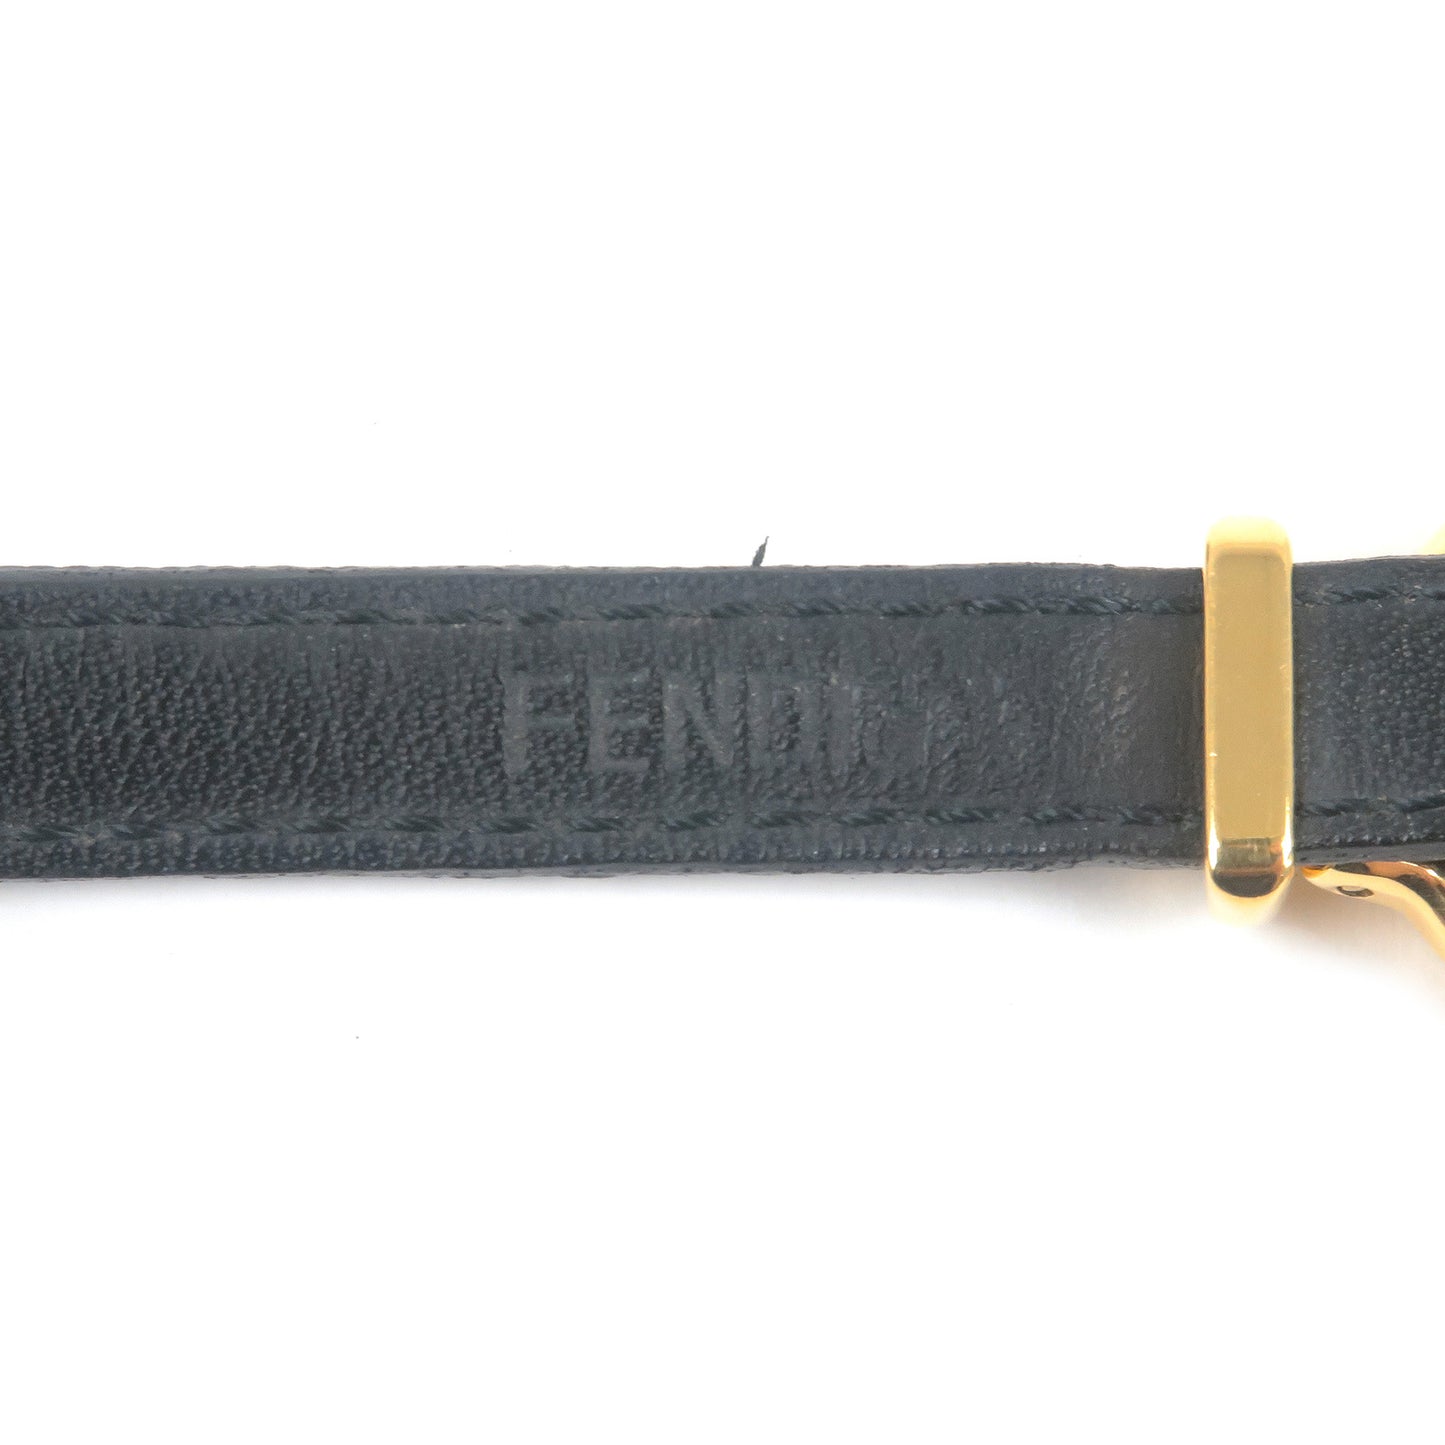 FENDI Chameleon Watch Ladies Changeable Leather Belt Wrist Watch Quartz 640L